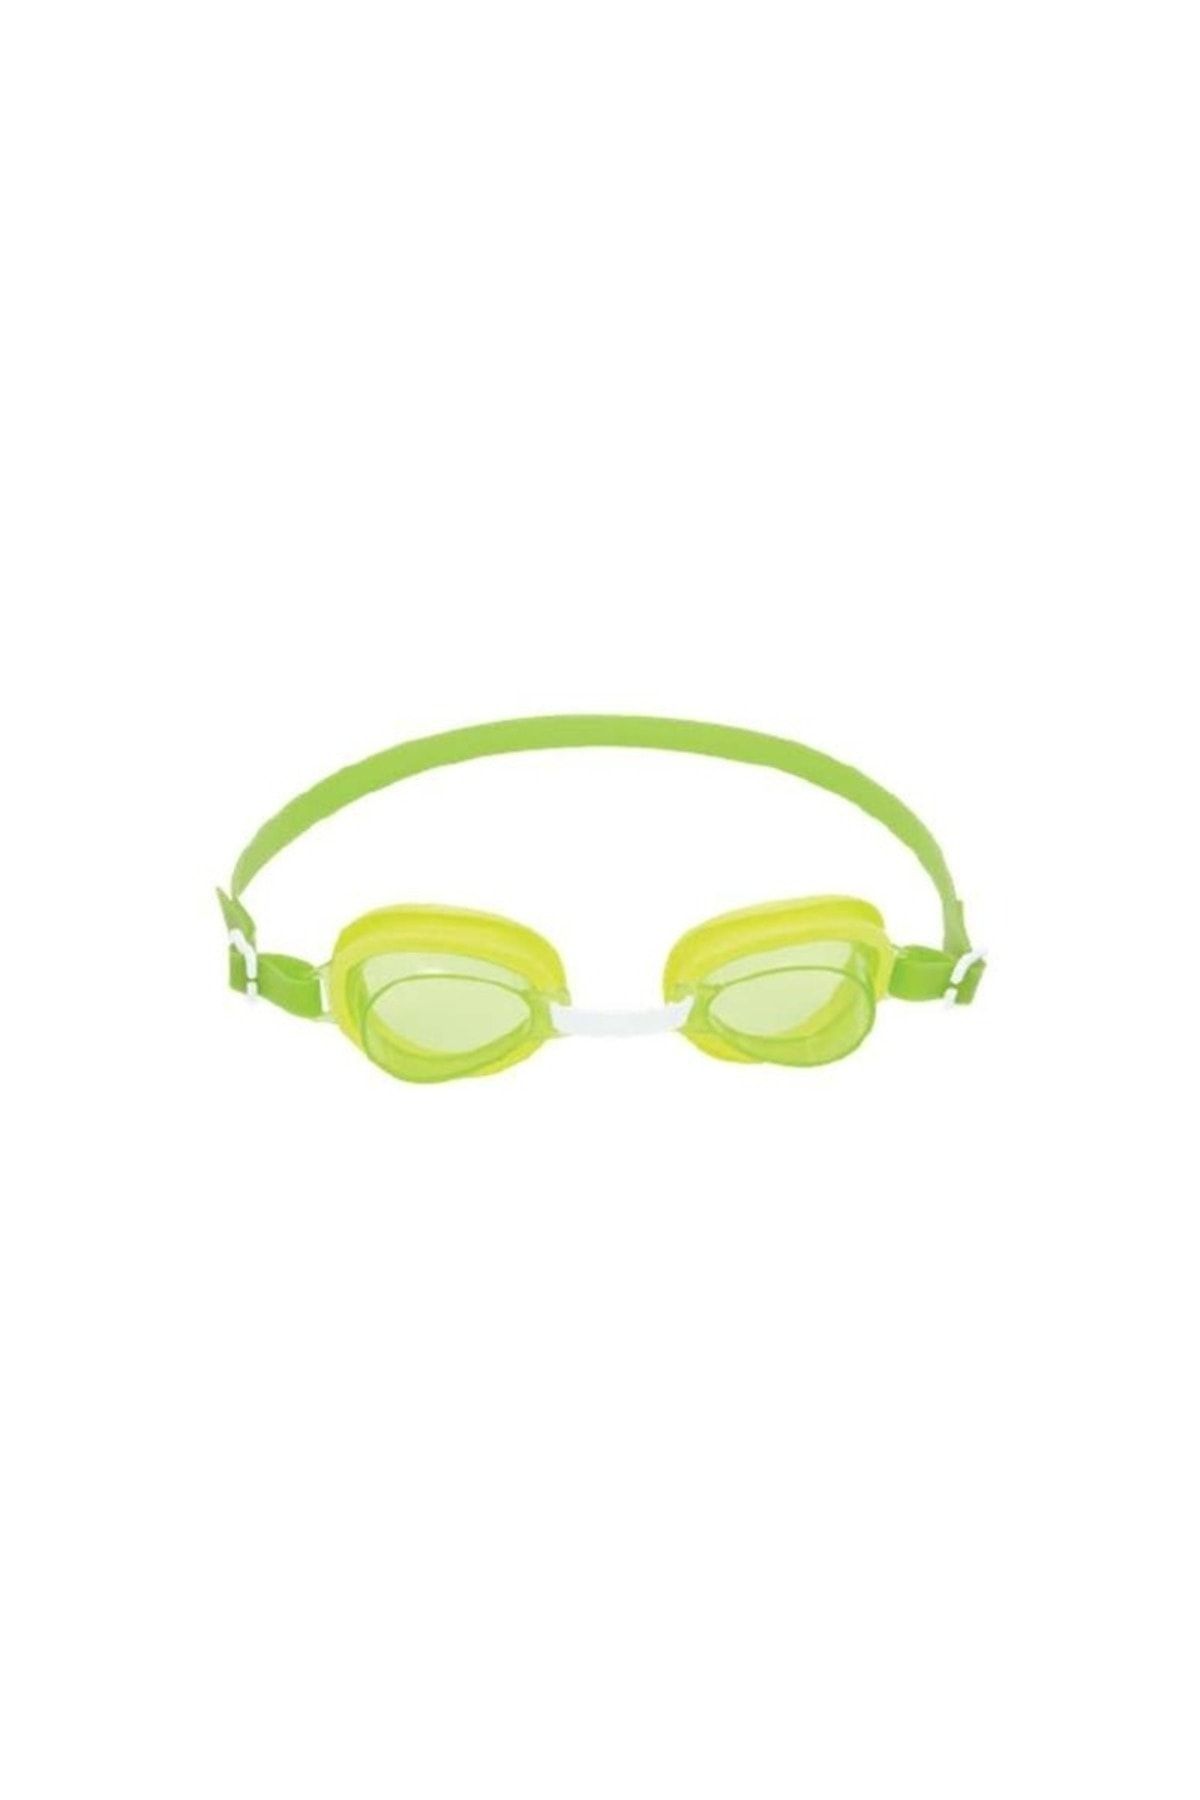 Efna Store Çocuk Yüzücü Gözlüğü 3 Yaş Uv Korumalı Ayarlanabilir Baş Lastikli